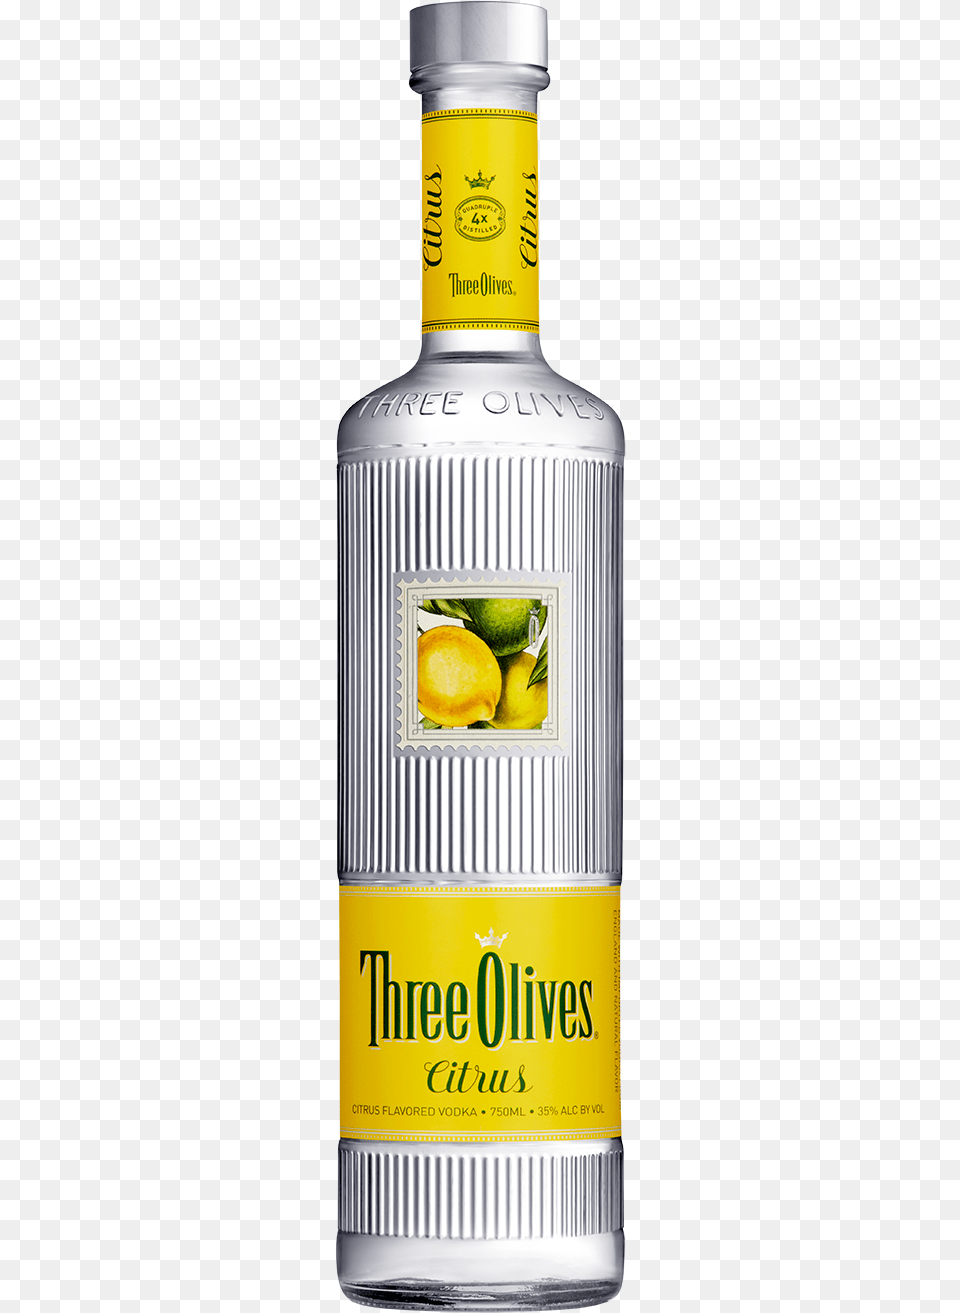 Three Olives Apple Pear Vodka, Alcohol, Liquor, Beverage, Gin Png Image